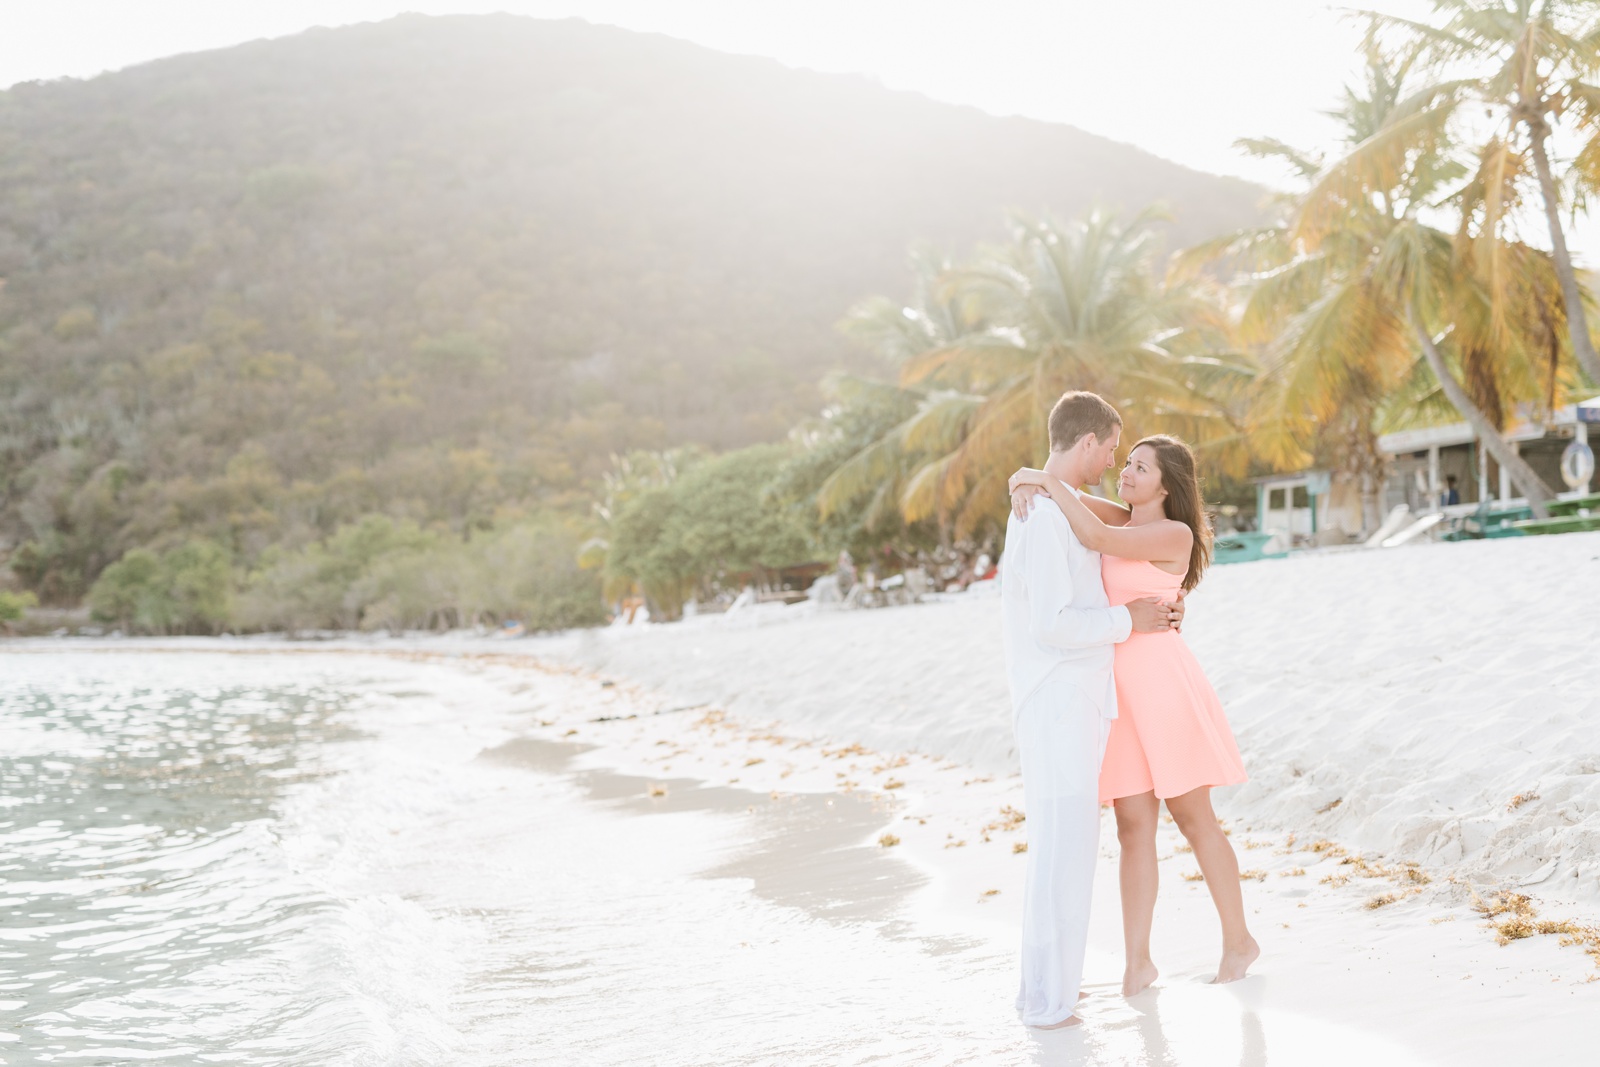 Romantic Tropical Engagement Photos in Jost van Dyke, British Virgin Islands by Boston & Destination Photographer Annmarie Swift